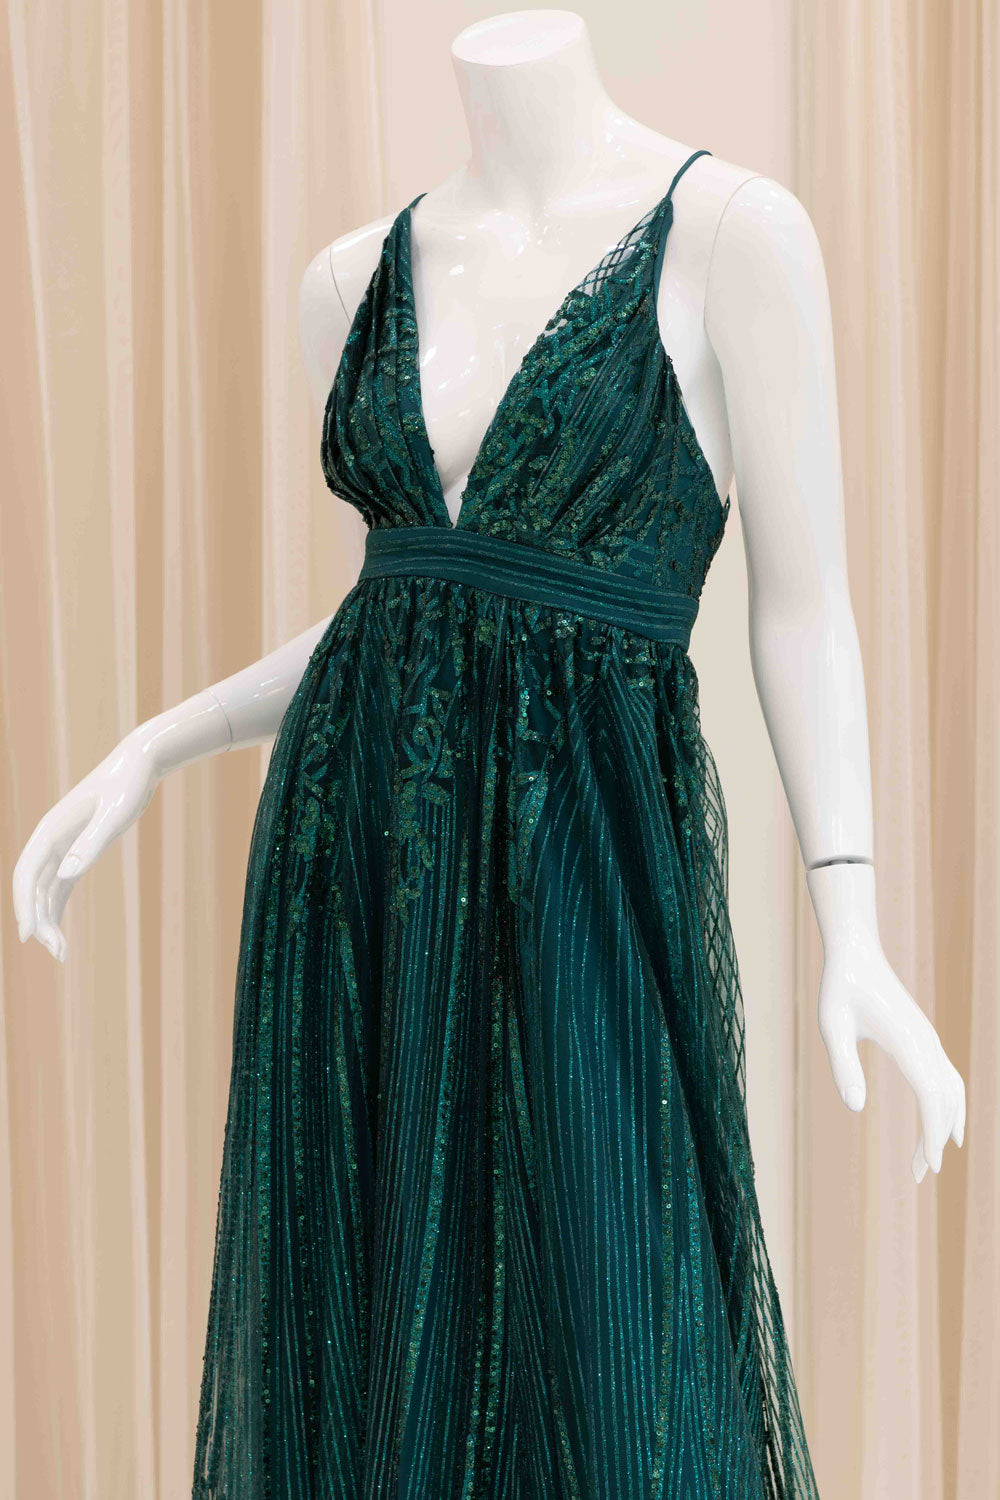 Aliah Marie Glitter Ball Gown in Green